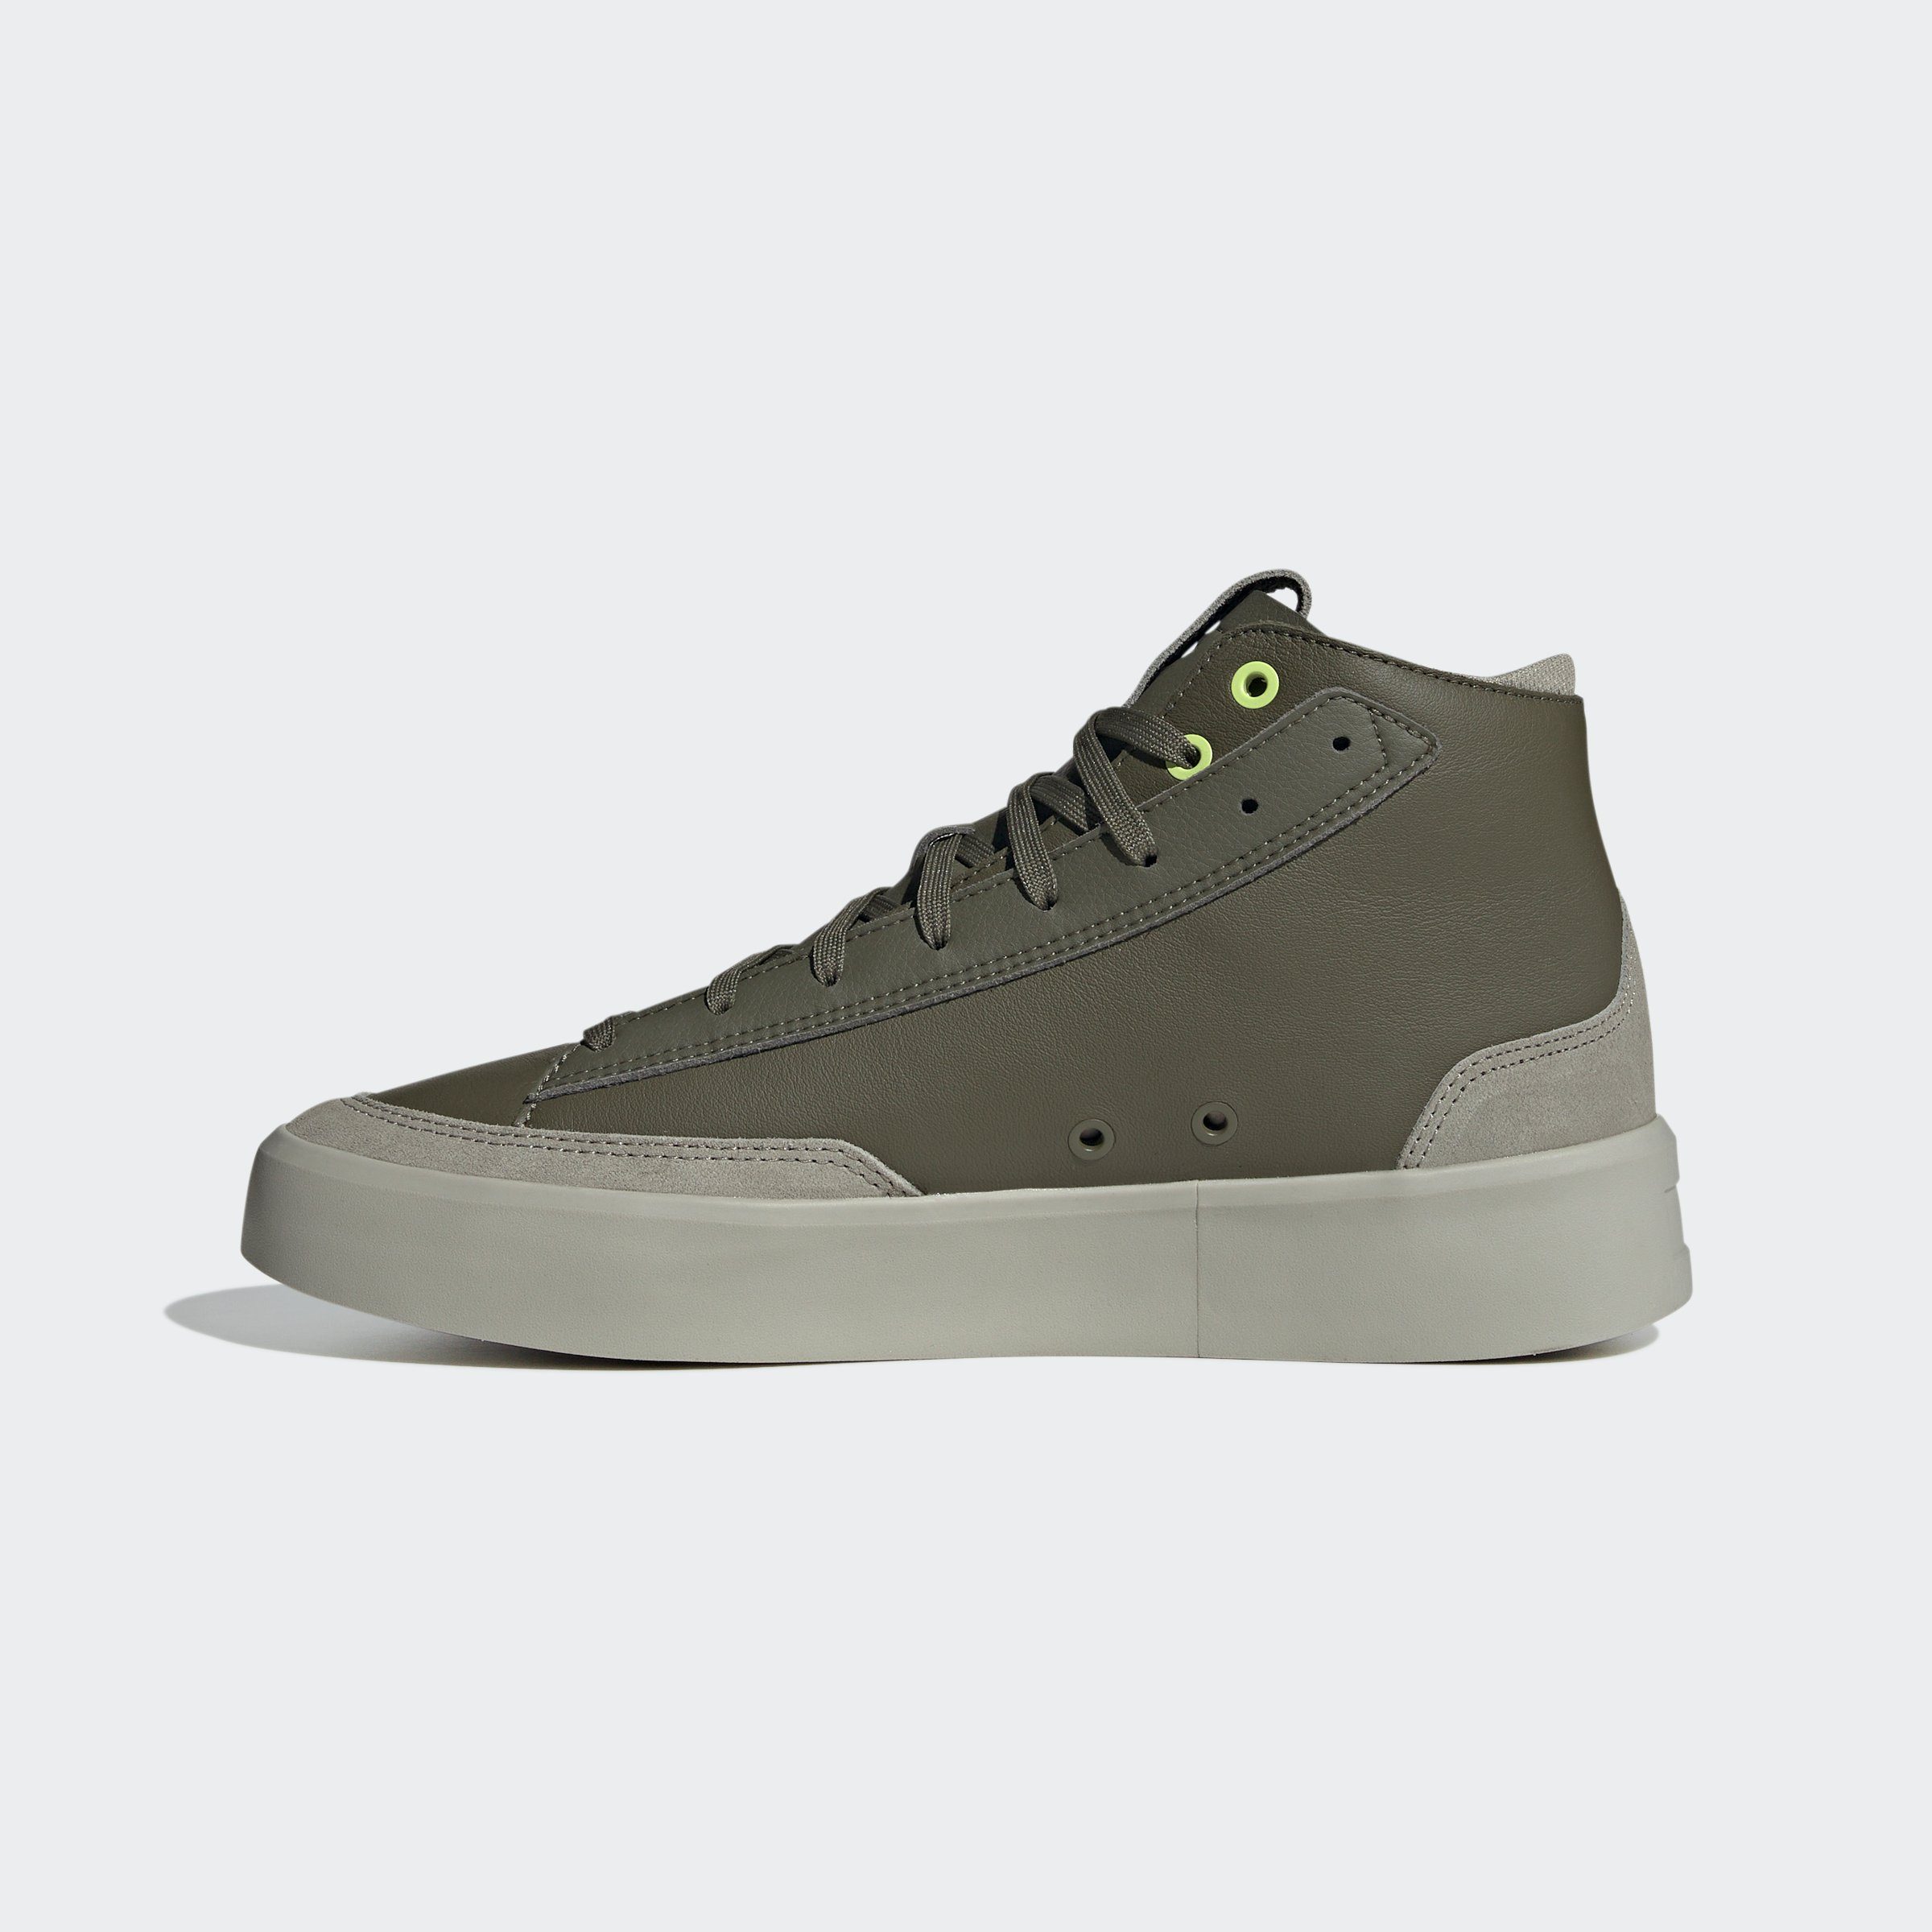 Pulse Silver adidas Sneaker Olive / Sportswear Strata / Lime ZNSORED Pebble HI